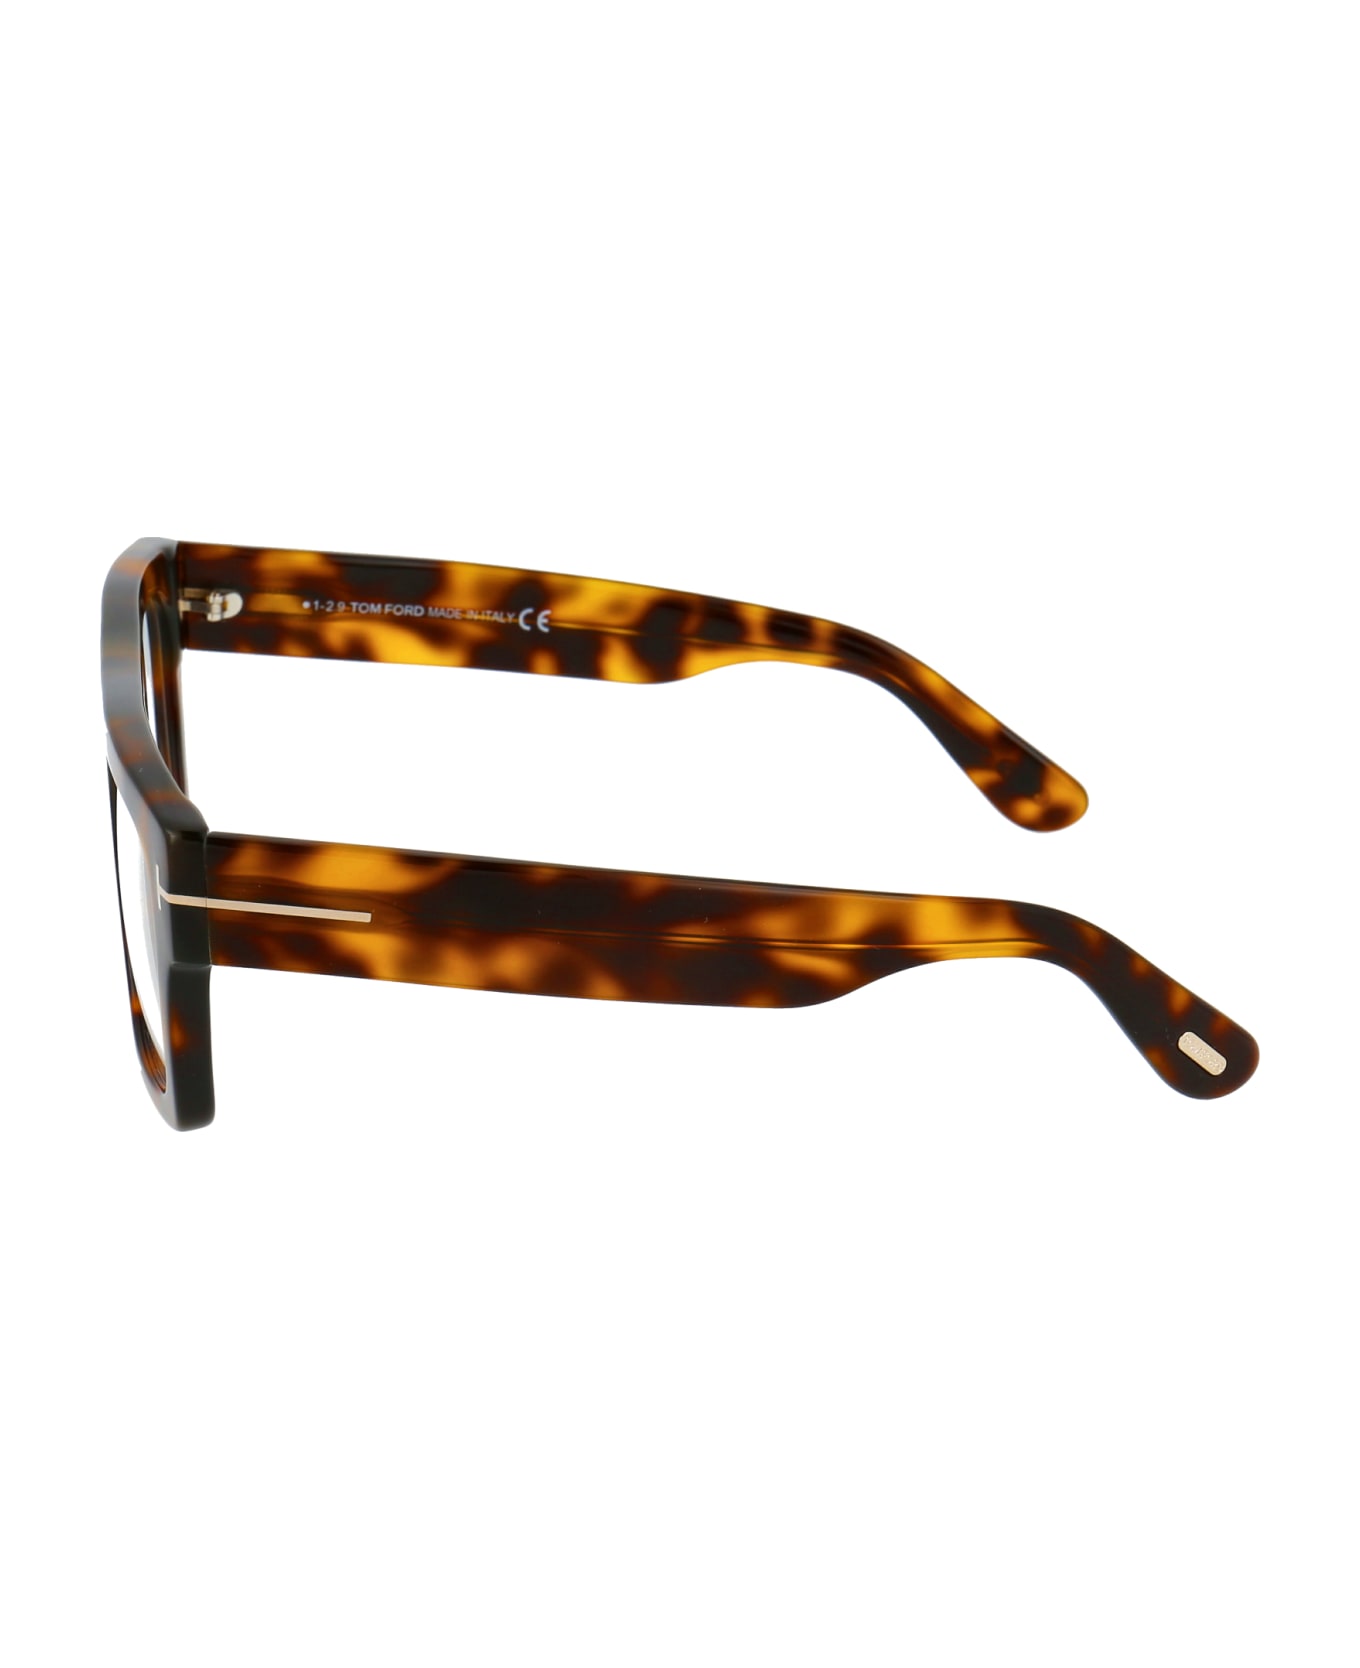 Tom Ford Eyewear Ft5634-b Glasses - 056 Avana/Altro アイウェア